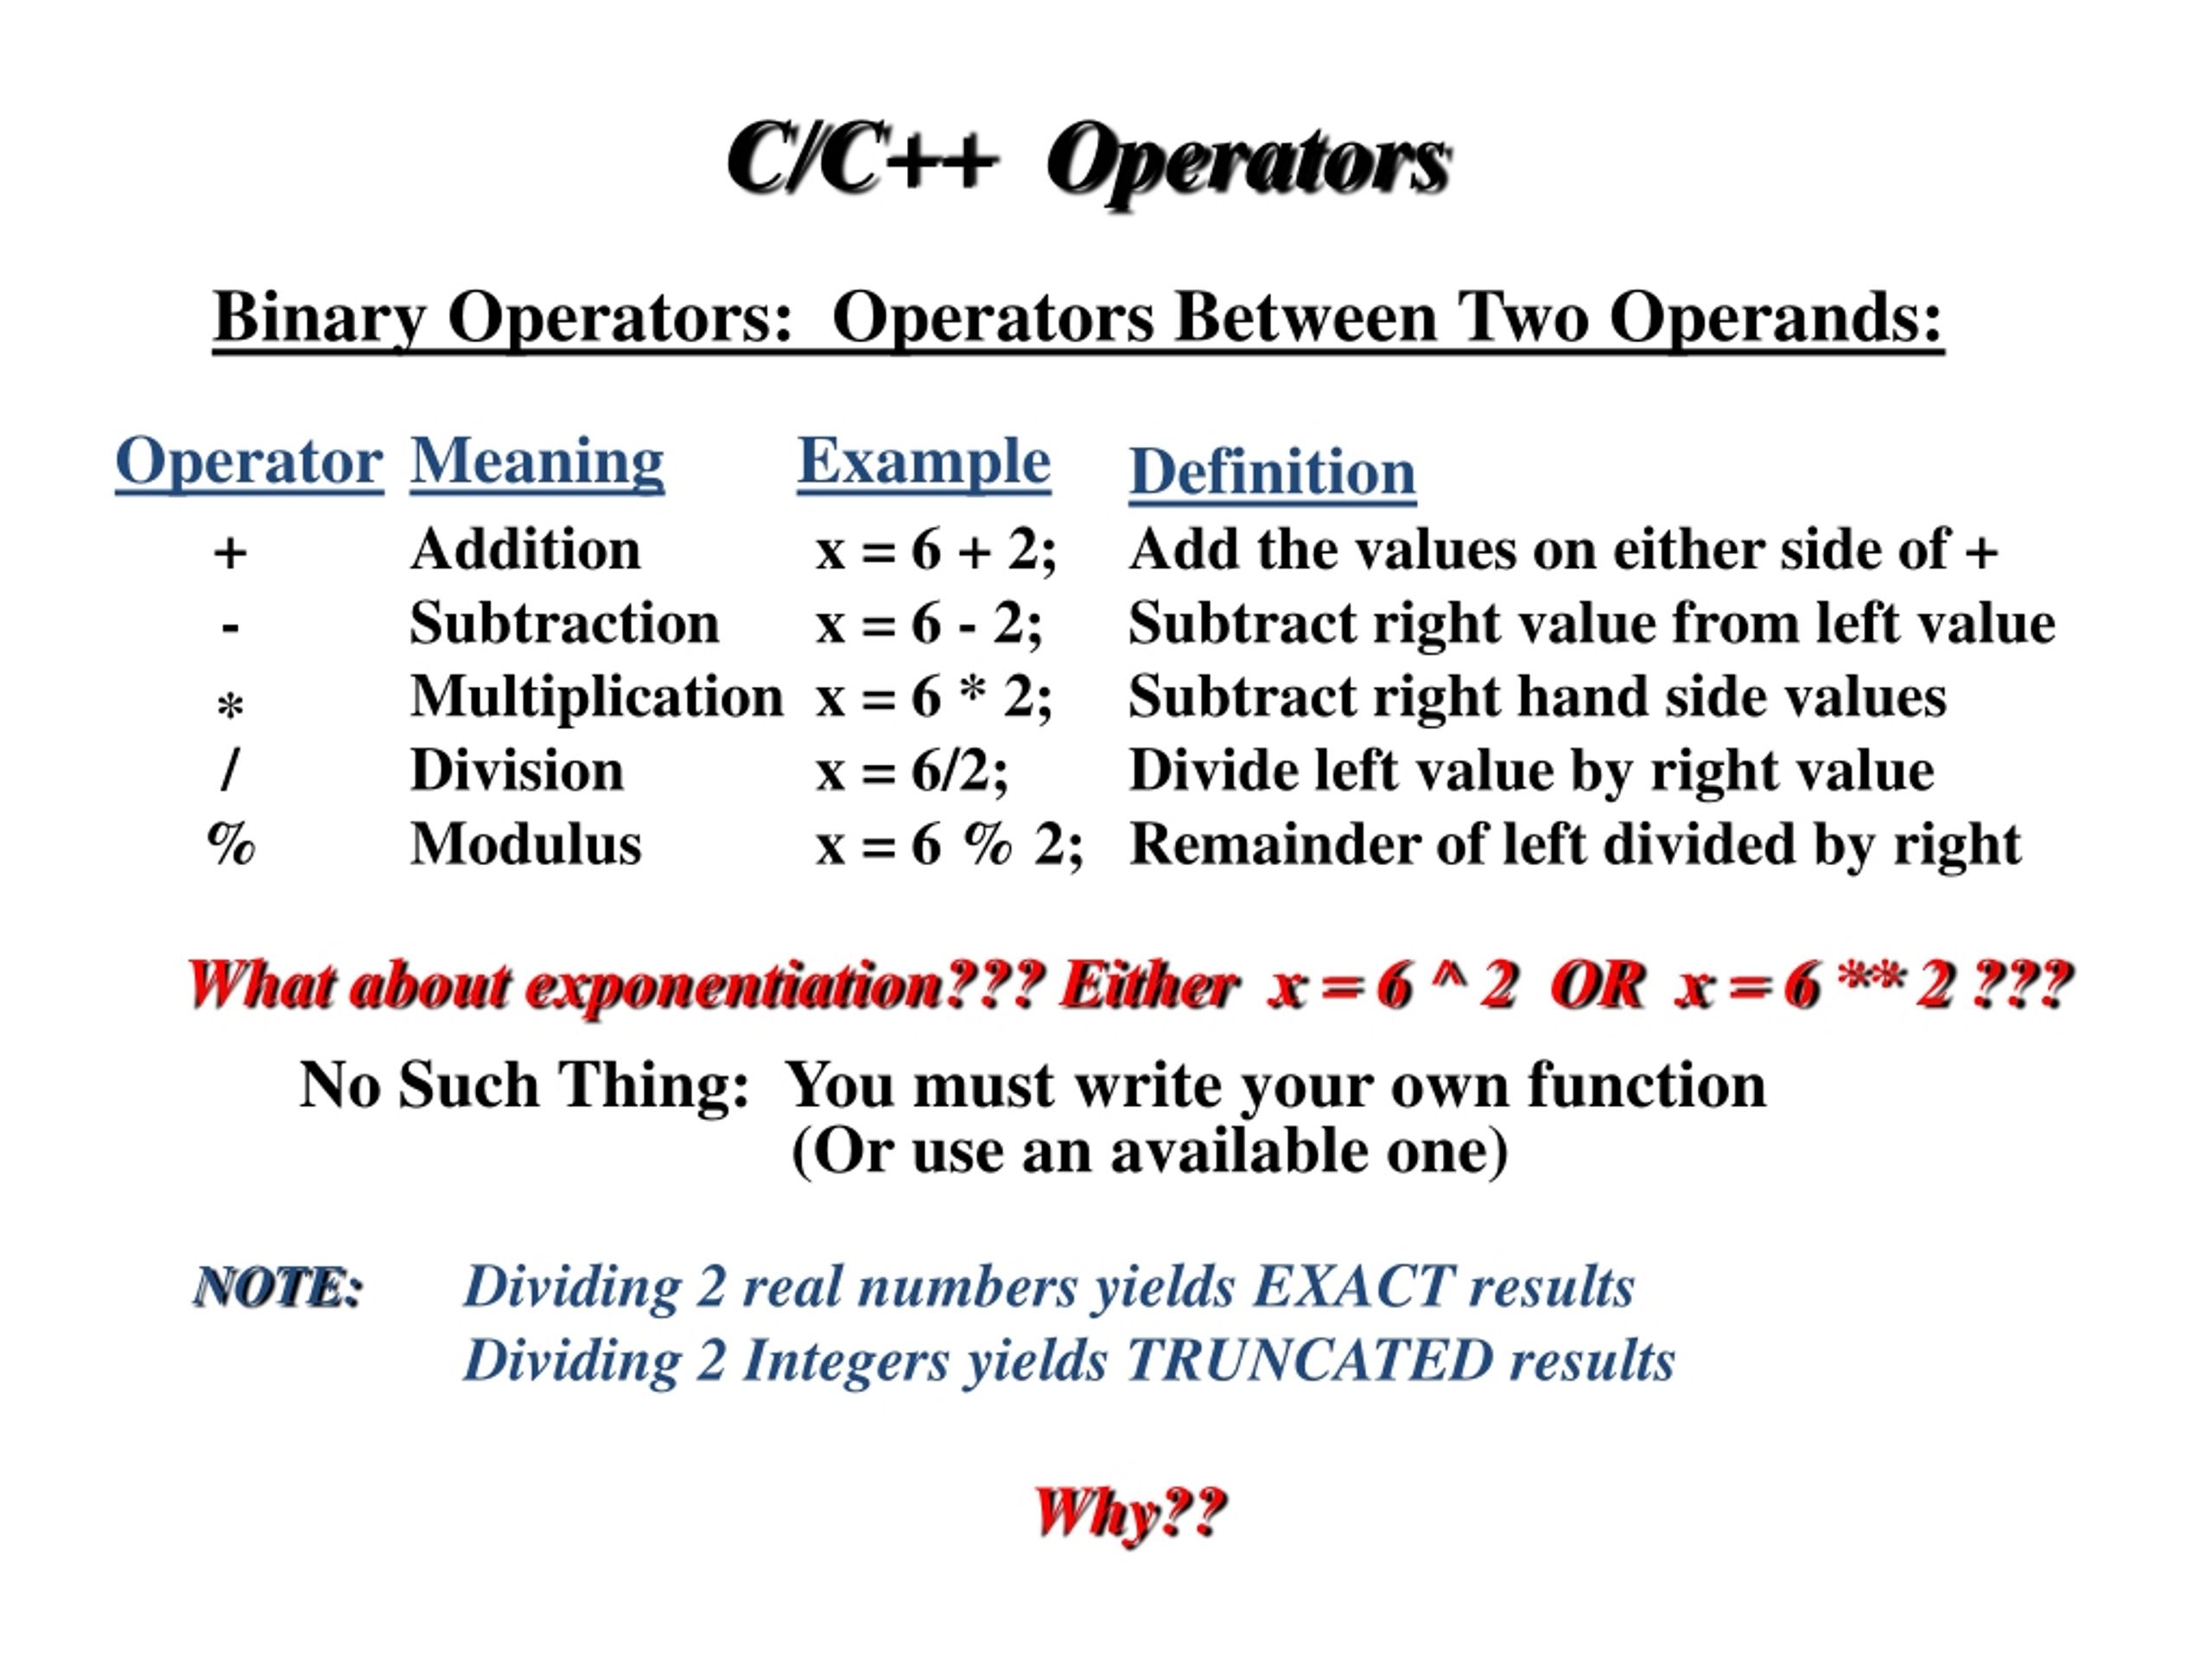 Operator function